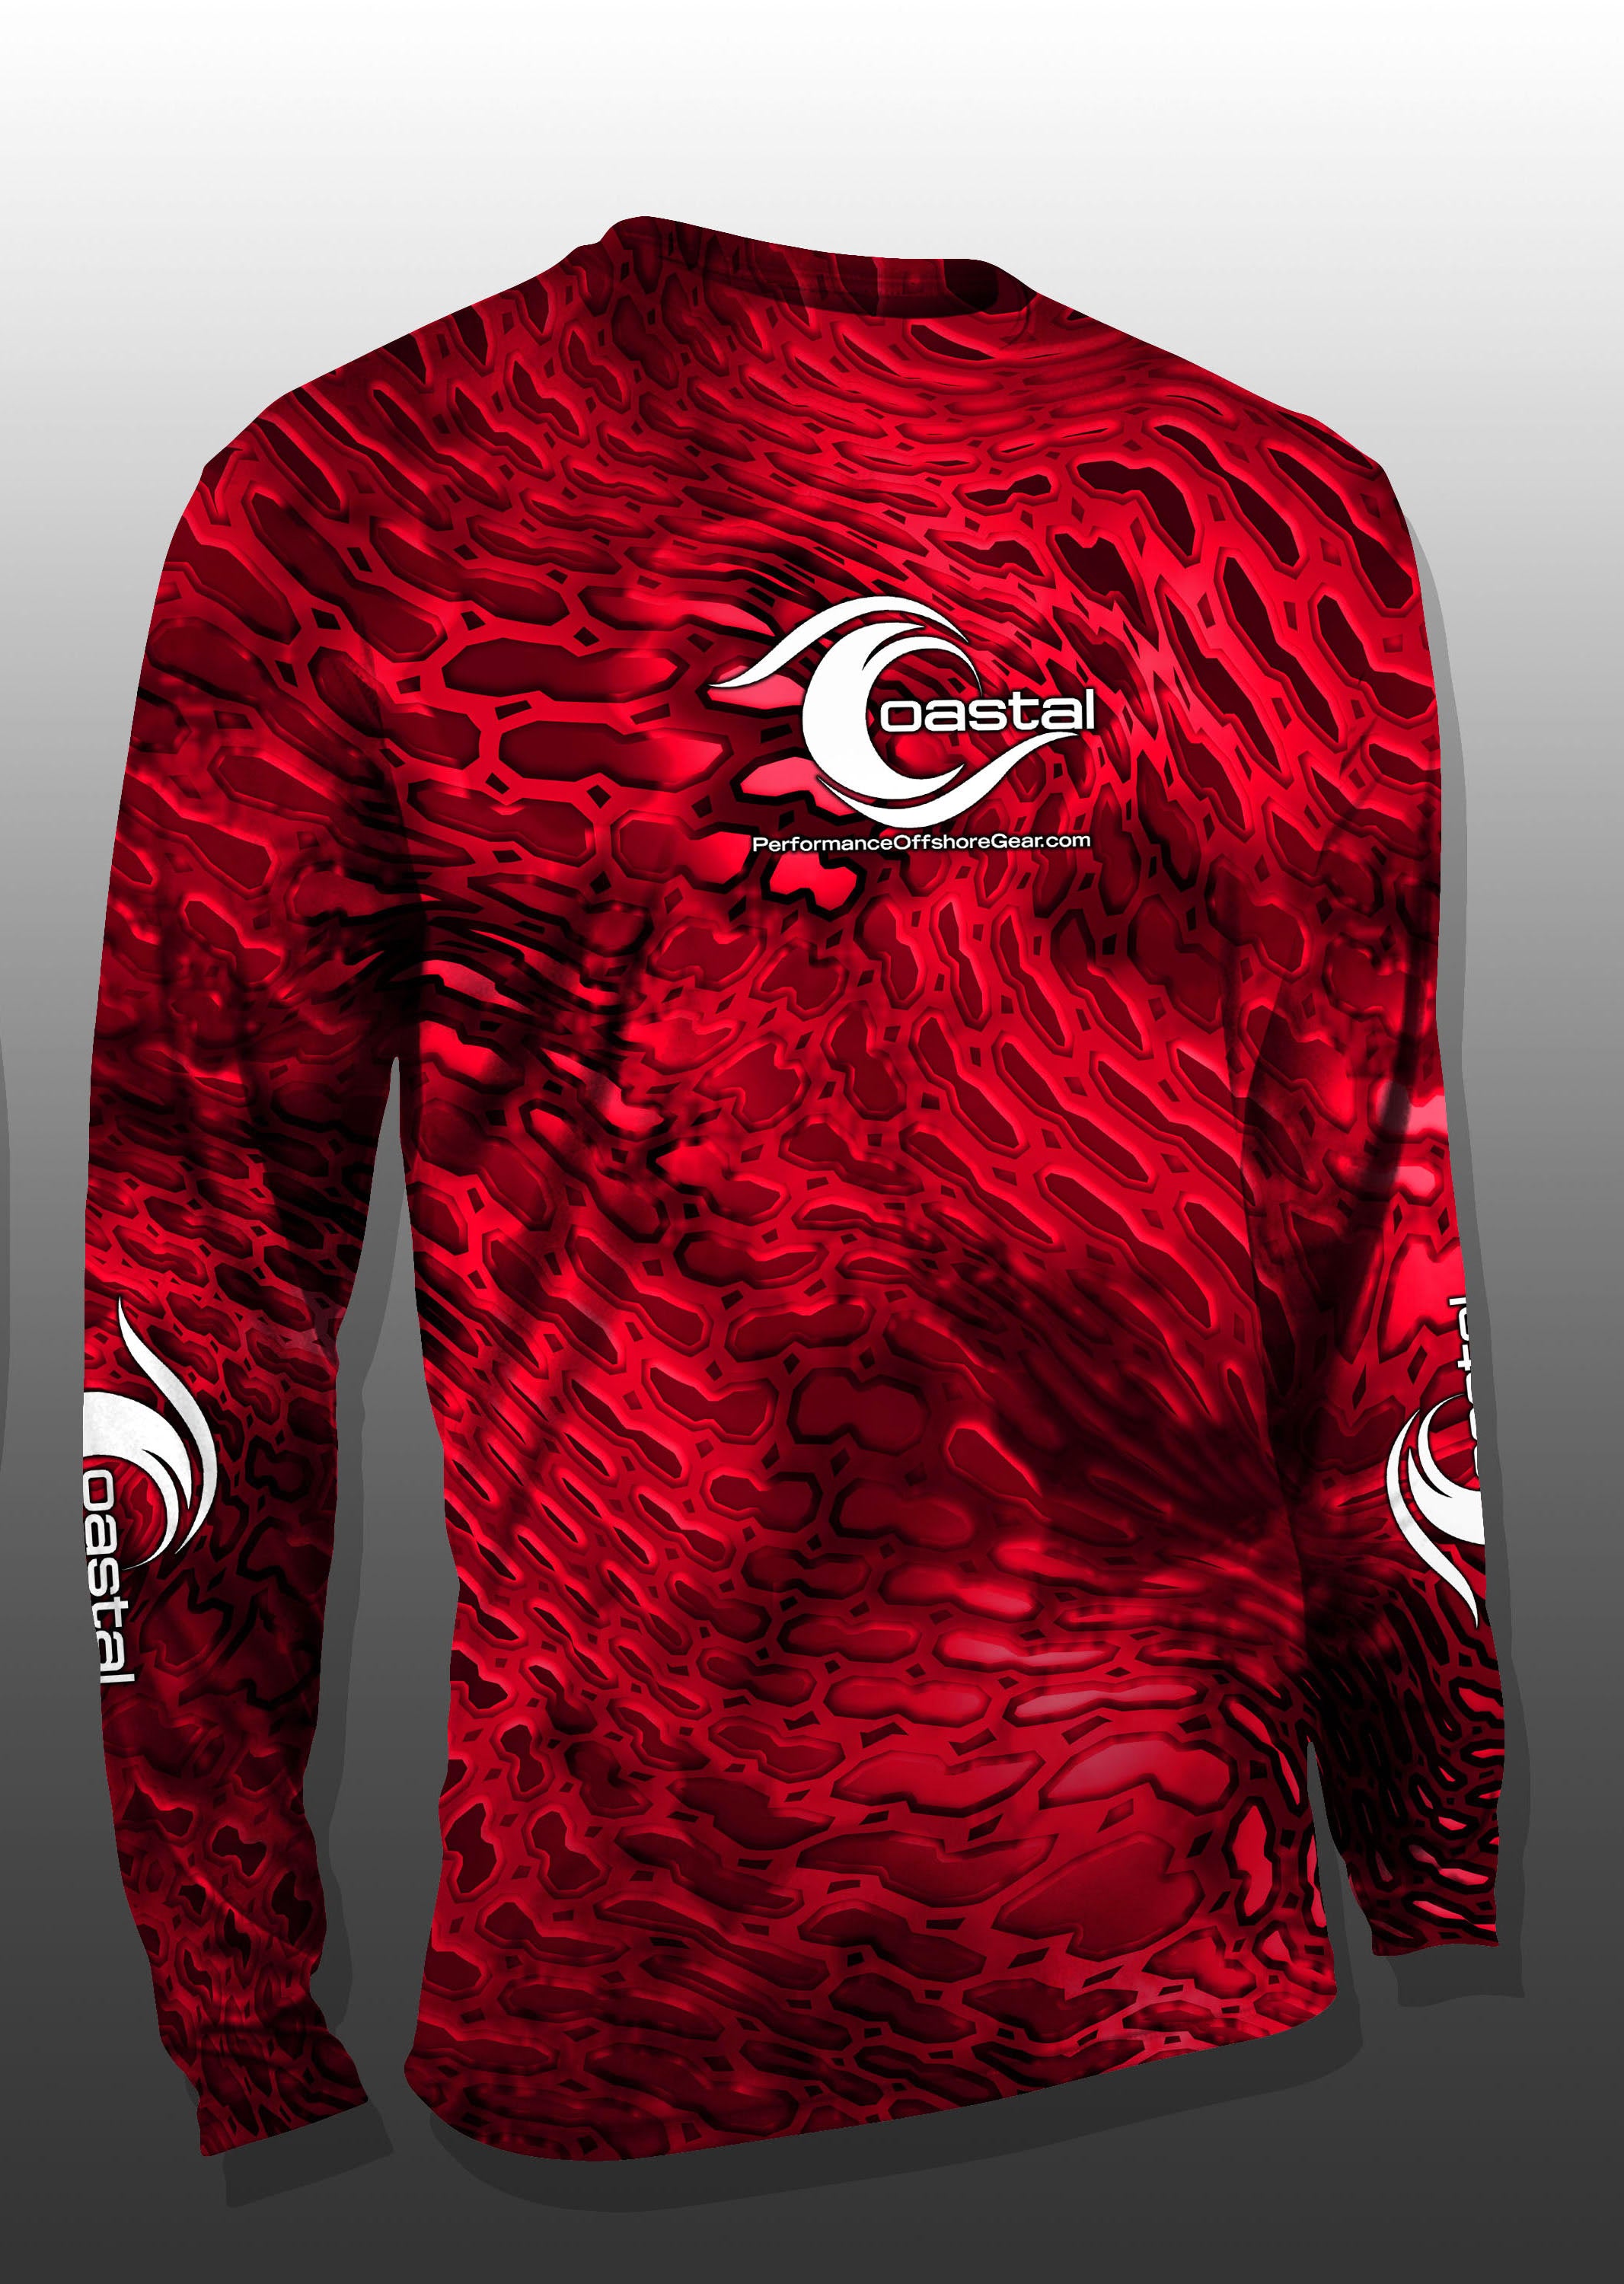 Coastal Red Camo Performance Long Sleeve T-shirt – Coastal